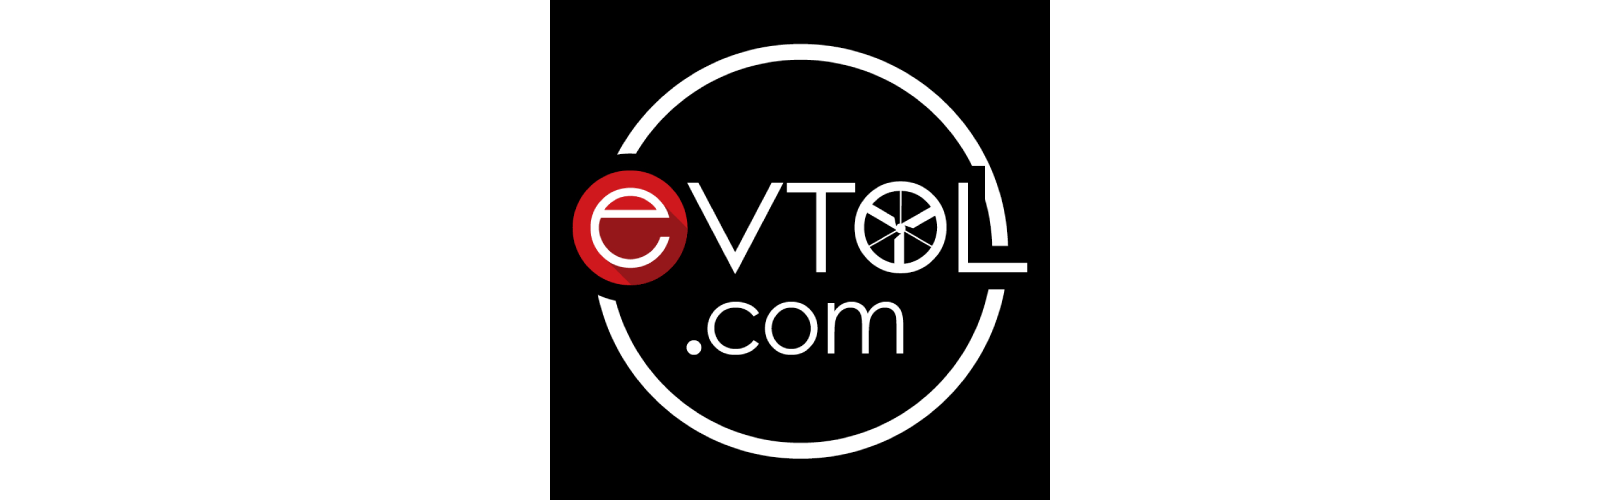 eVTOL.com: GPMS brings Foresight condition monitoring to eVTOL market